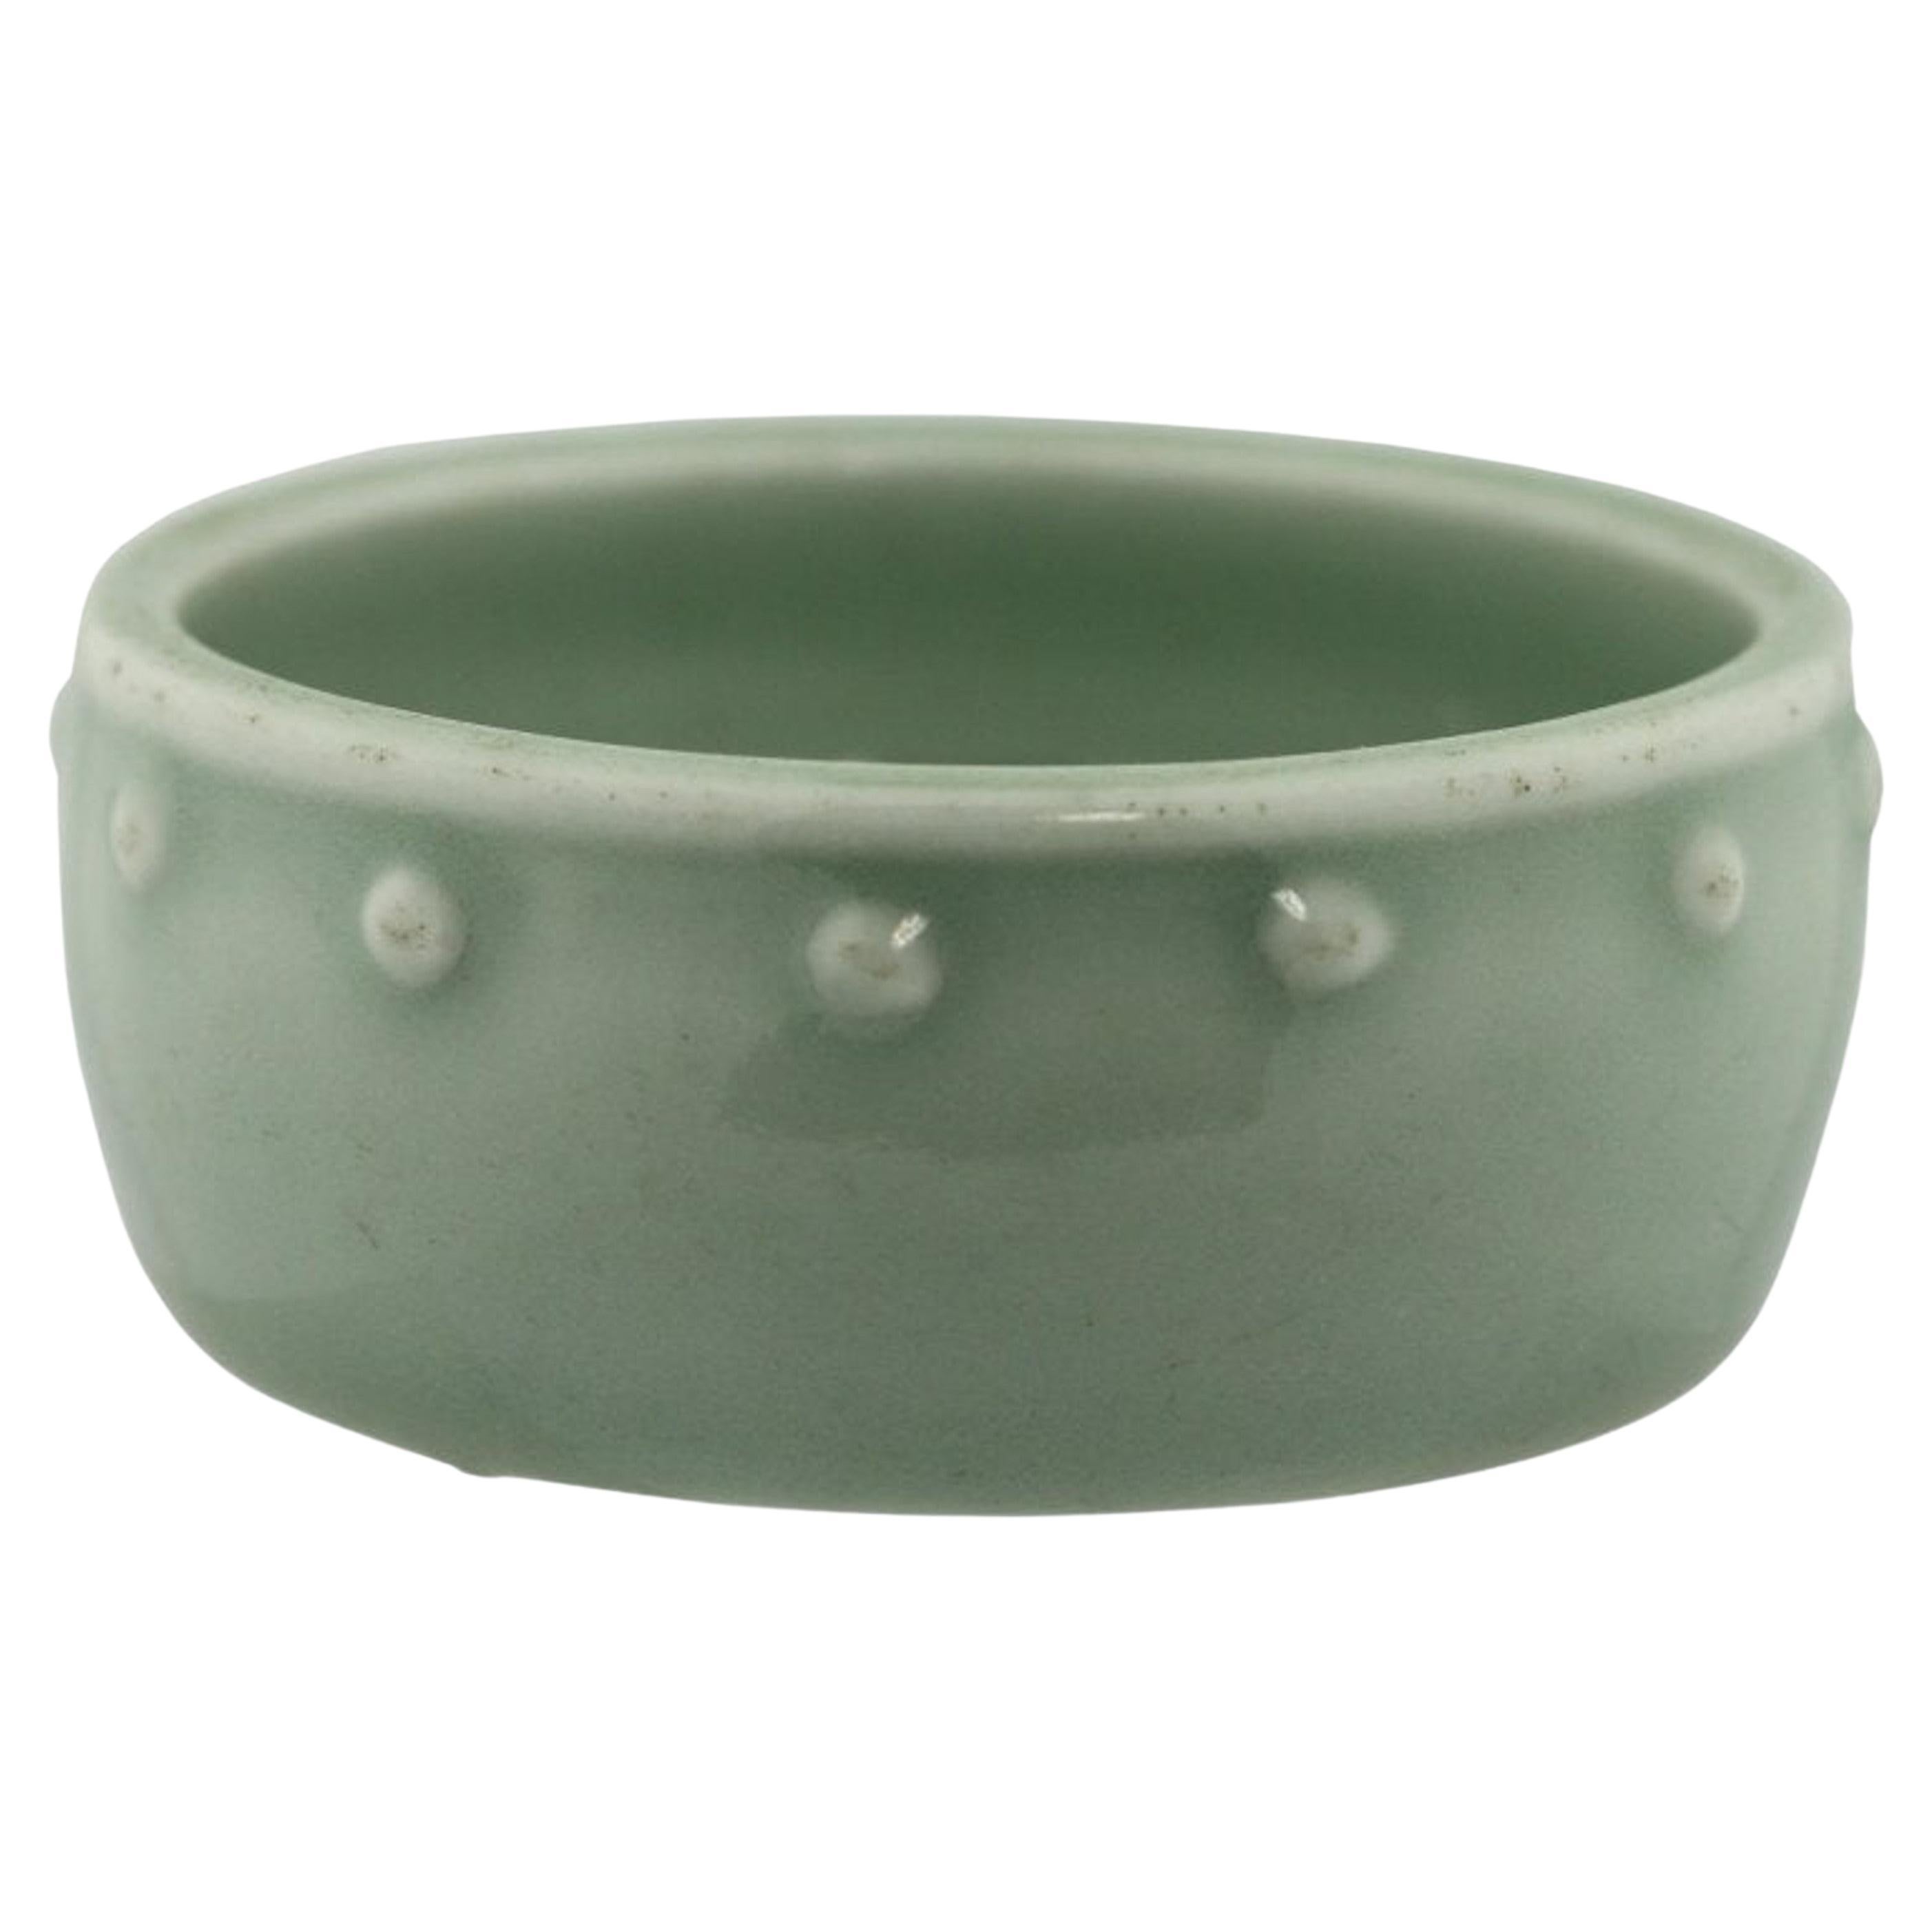 Small Celadon Porcelain Bowl, Chinese